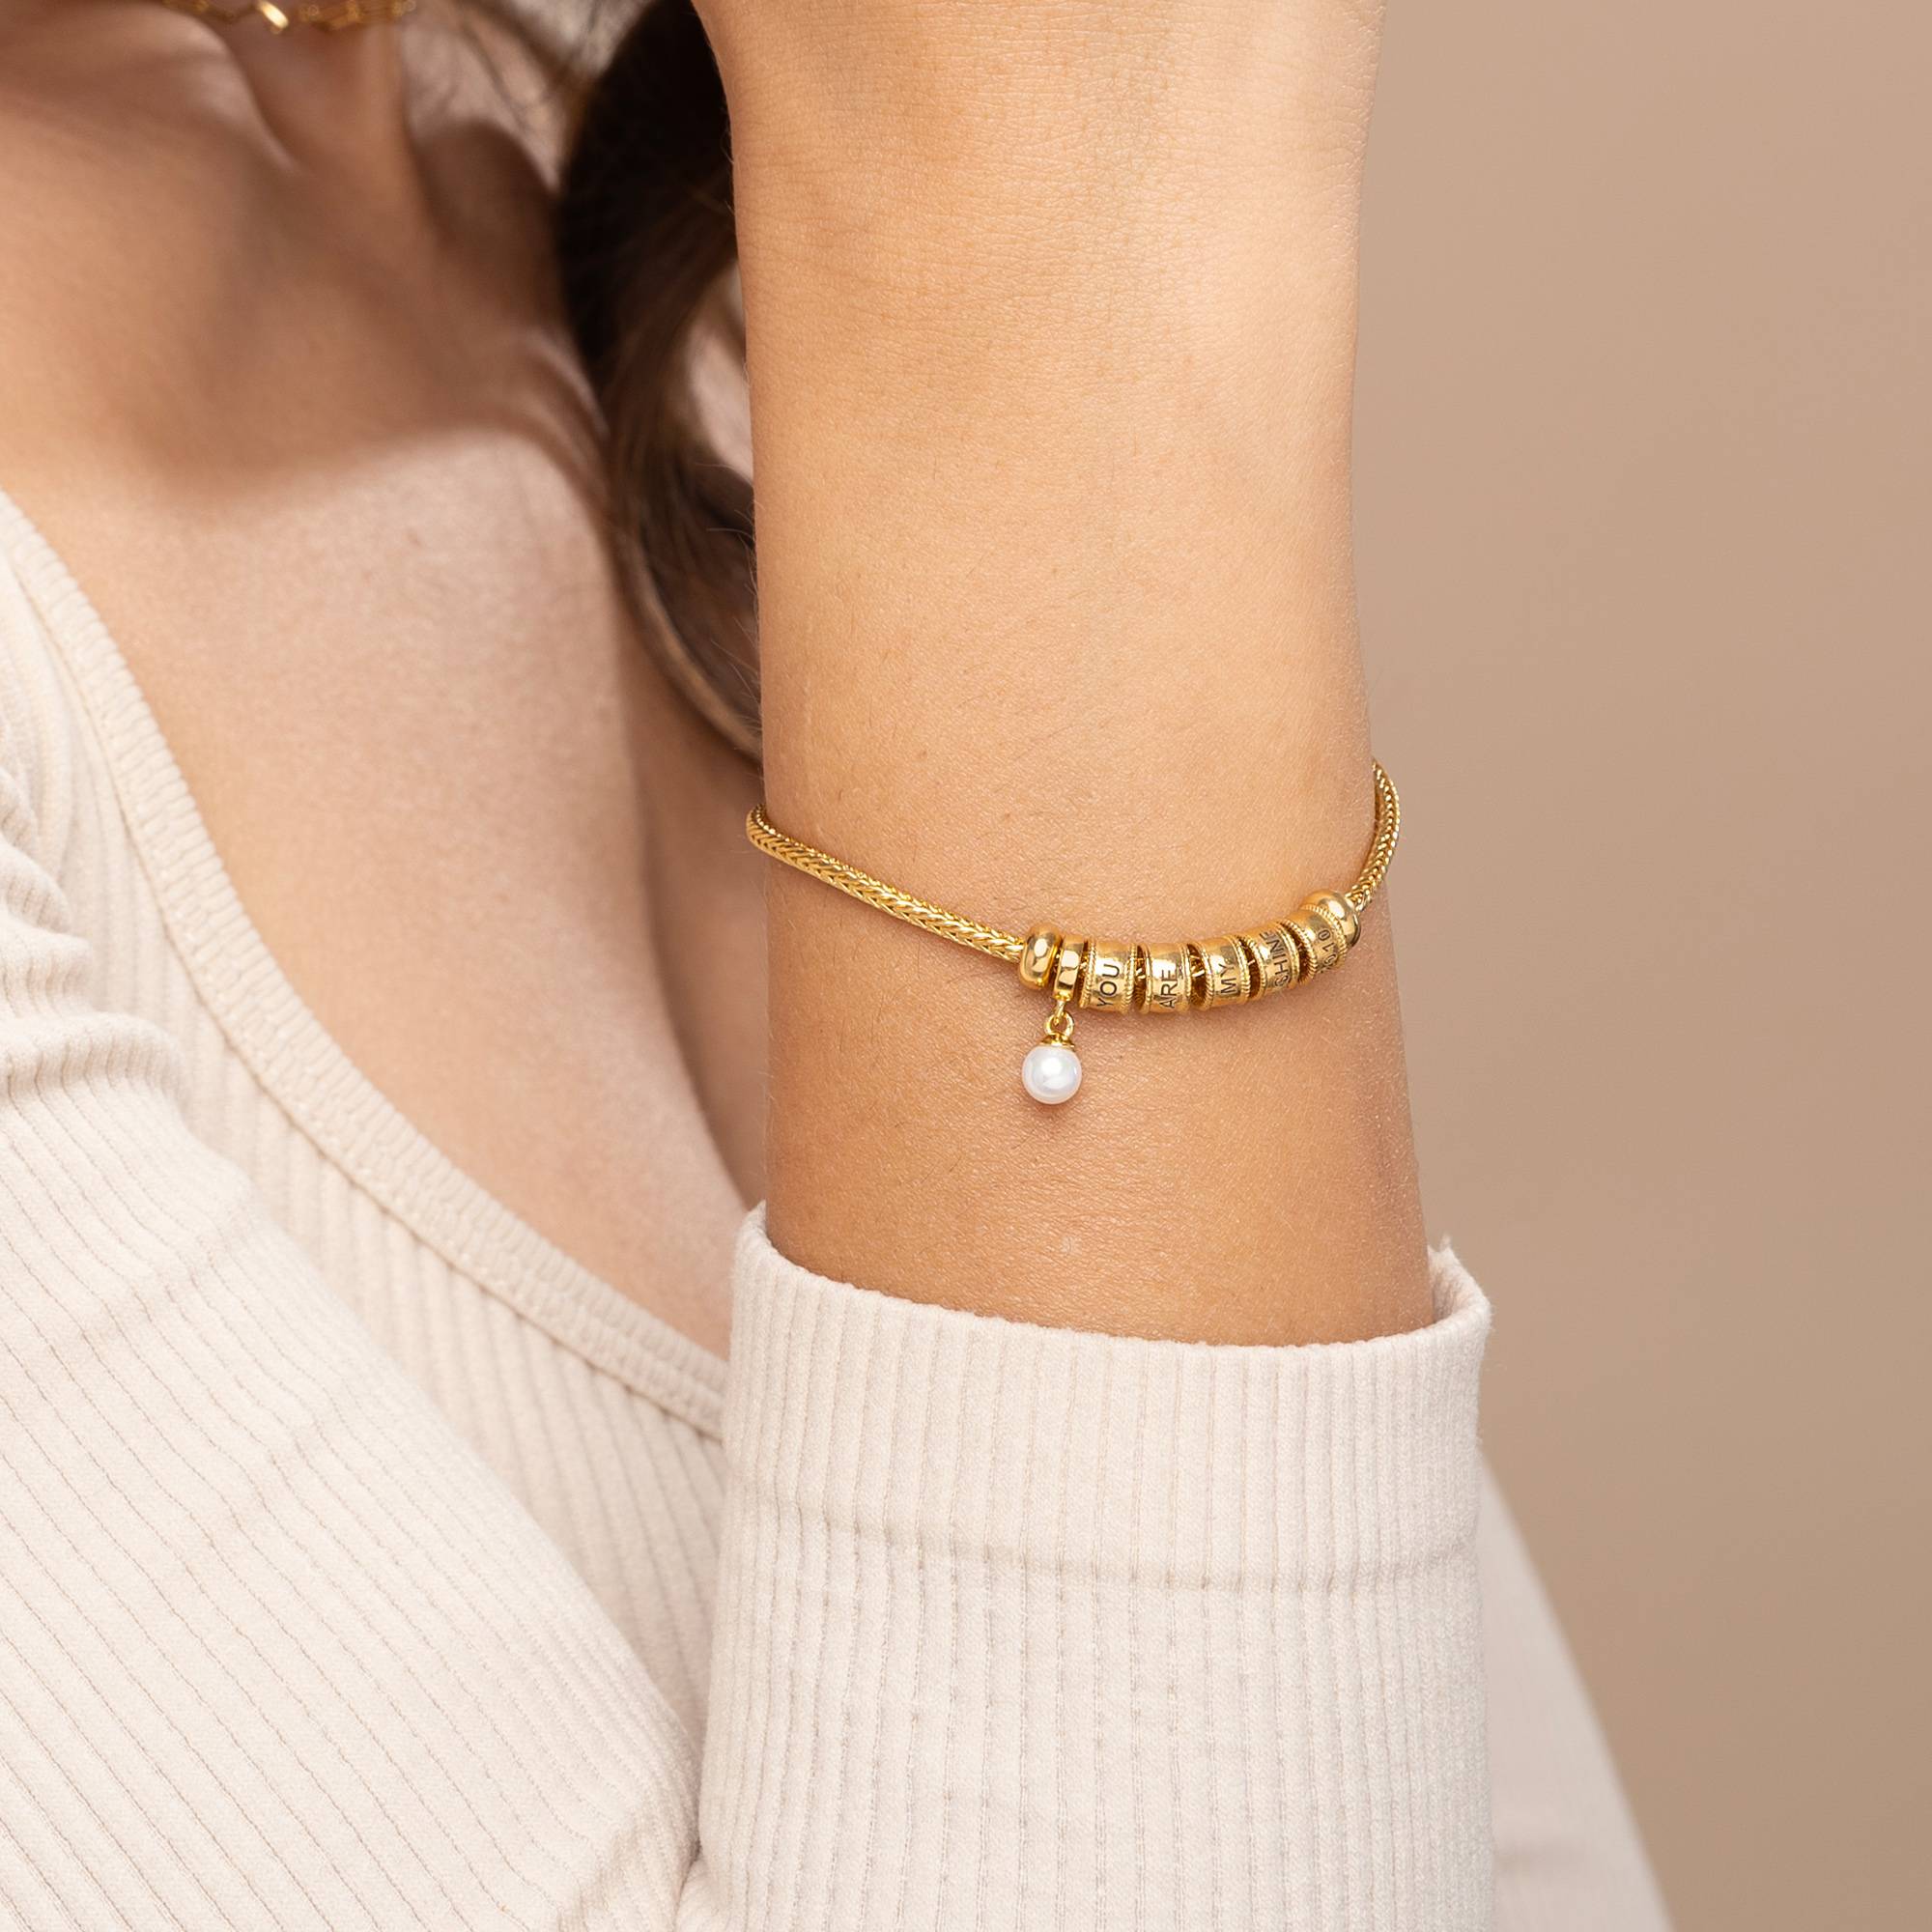 Linda Armband met Diamant en Hartvormig Slotje in 18k Goud Vermeil-1 Productfoto